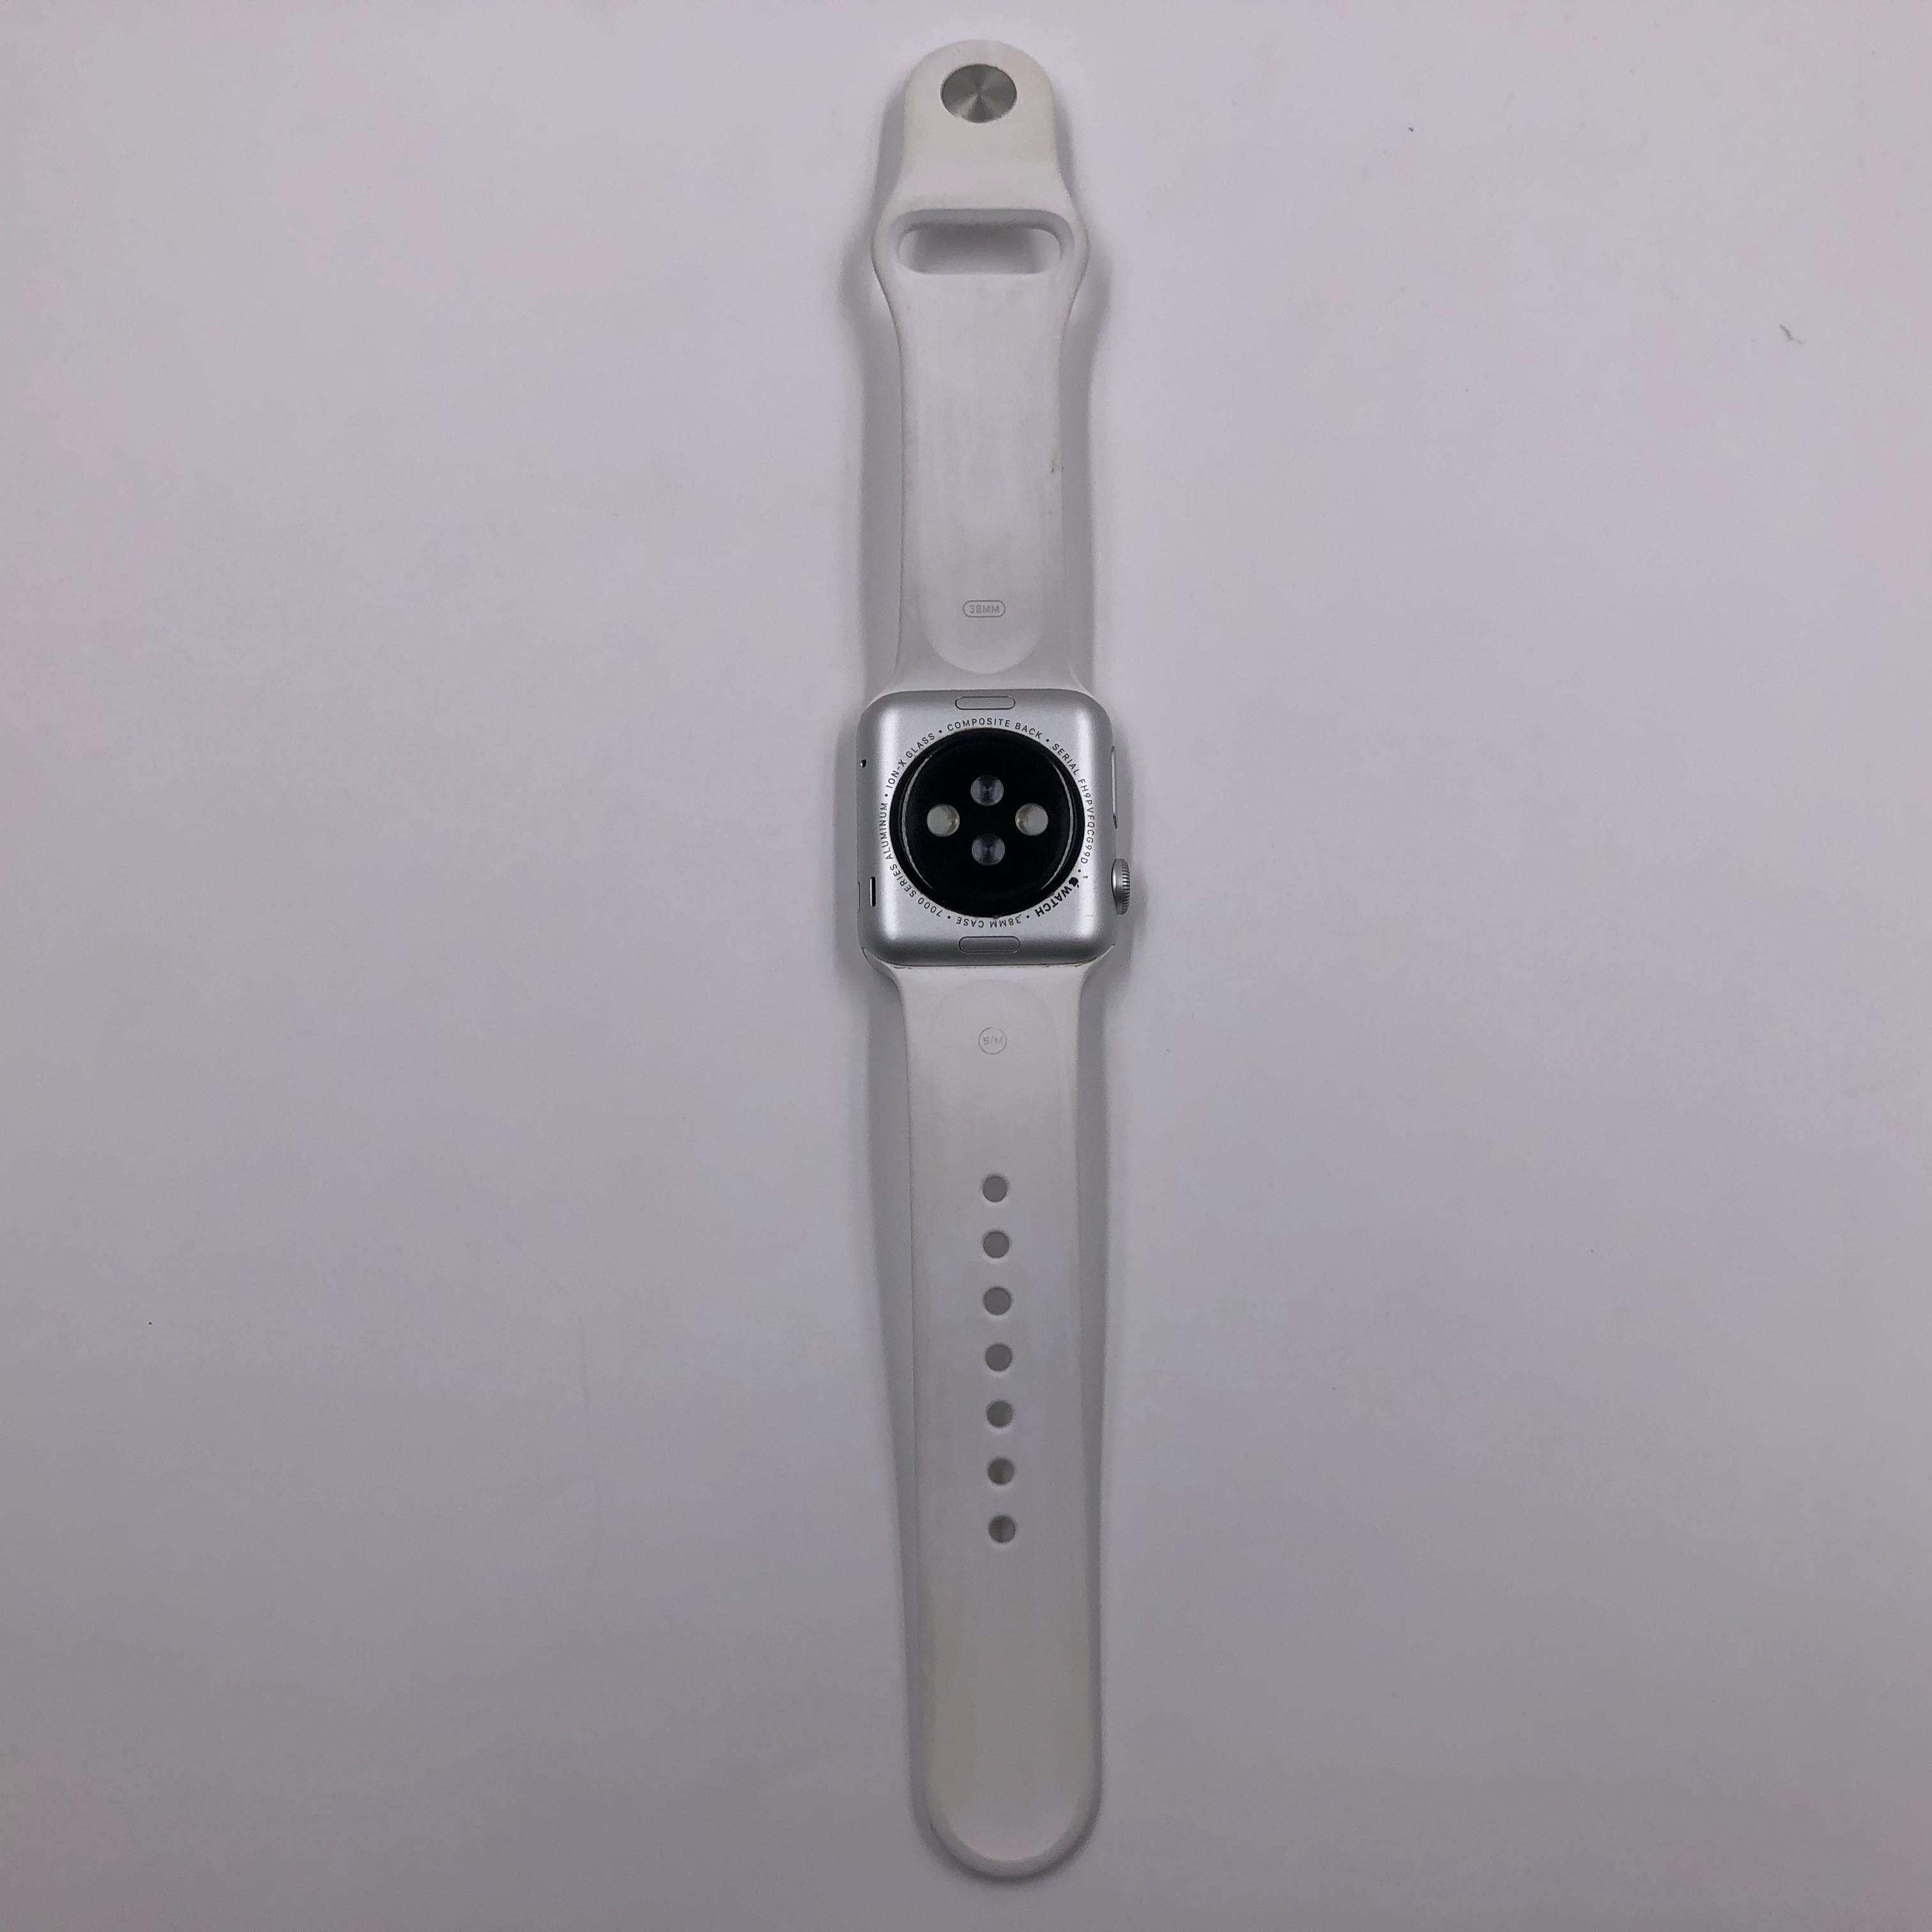 Apple Watch Series 1铝金属表壳 38MM 国行GPS版